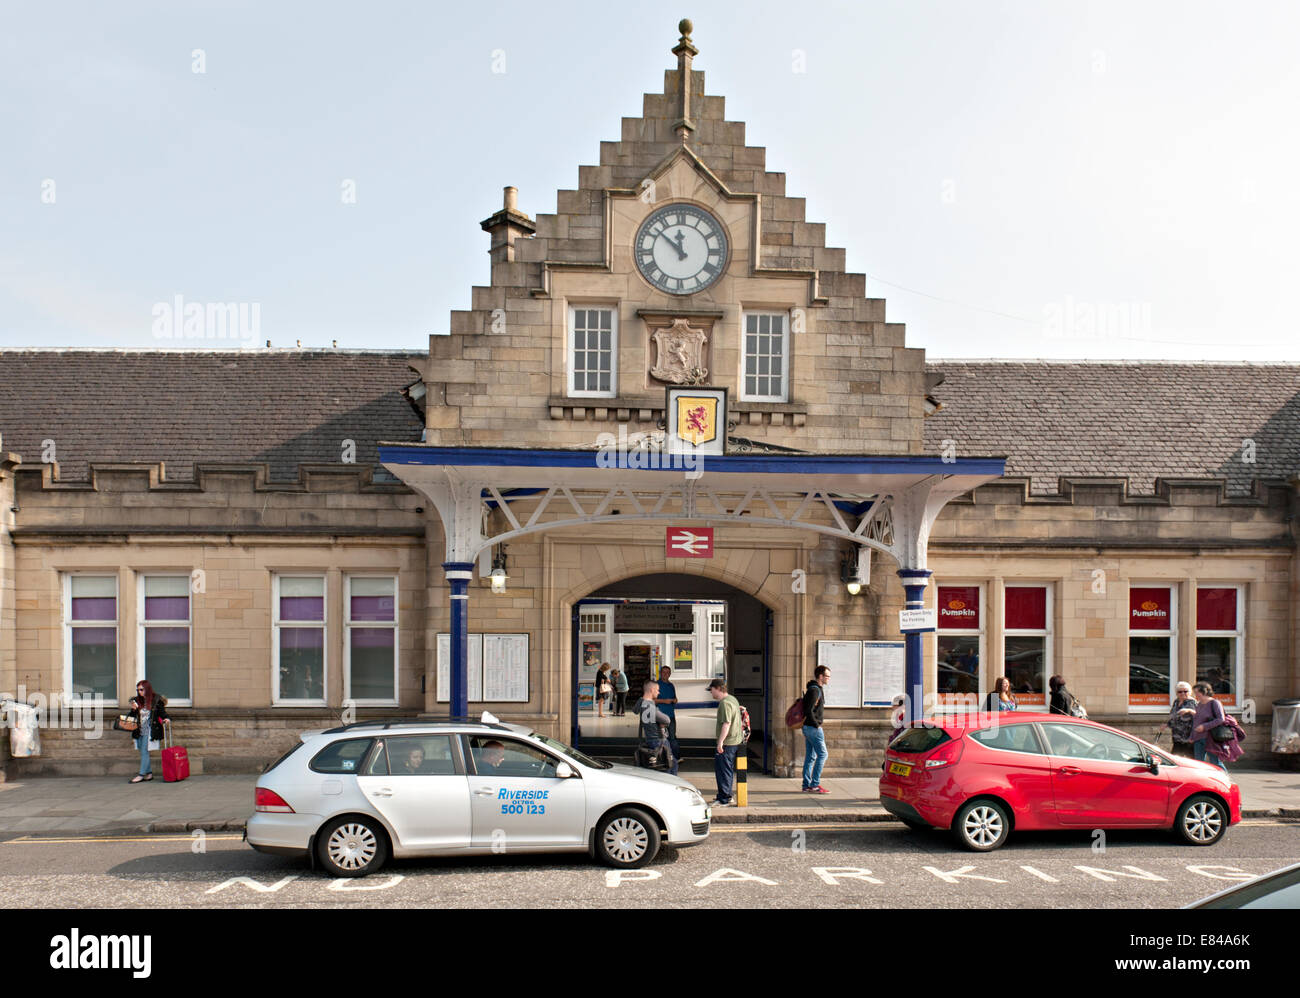 The entrance to Stirling Railway Station, Stirling, Scotland, UK Stock Photo